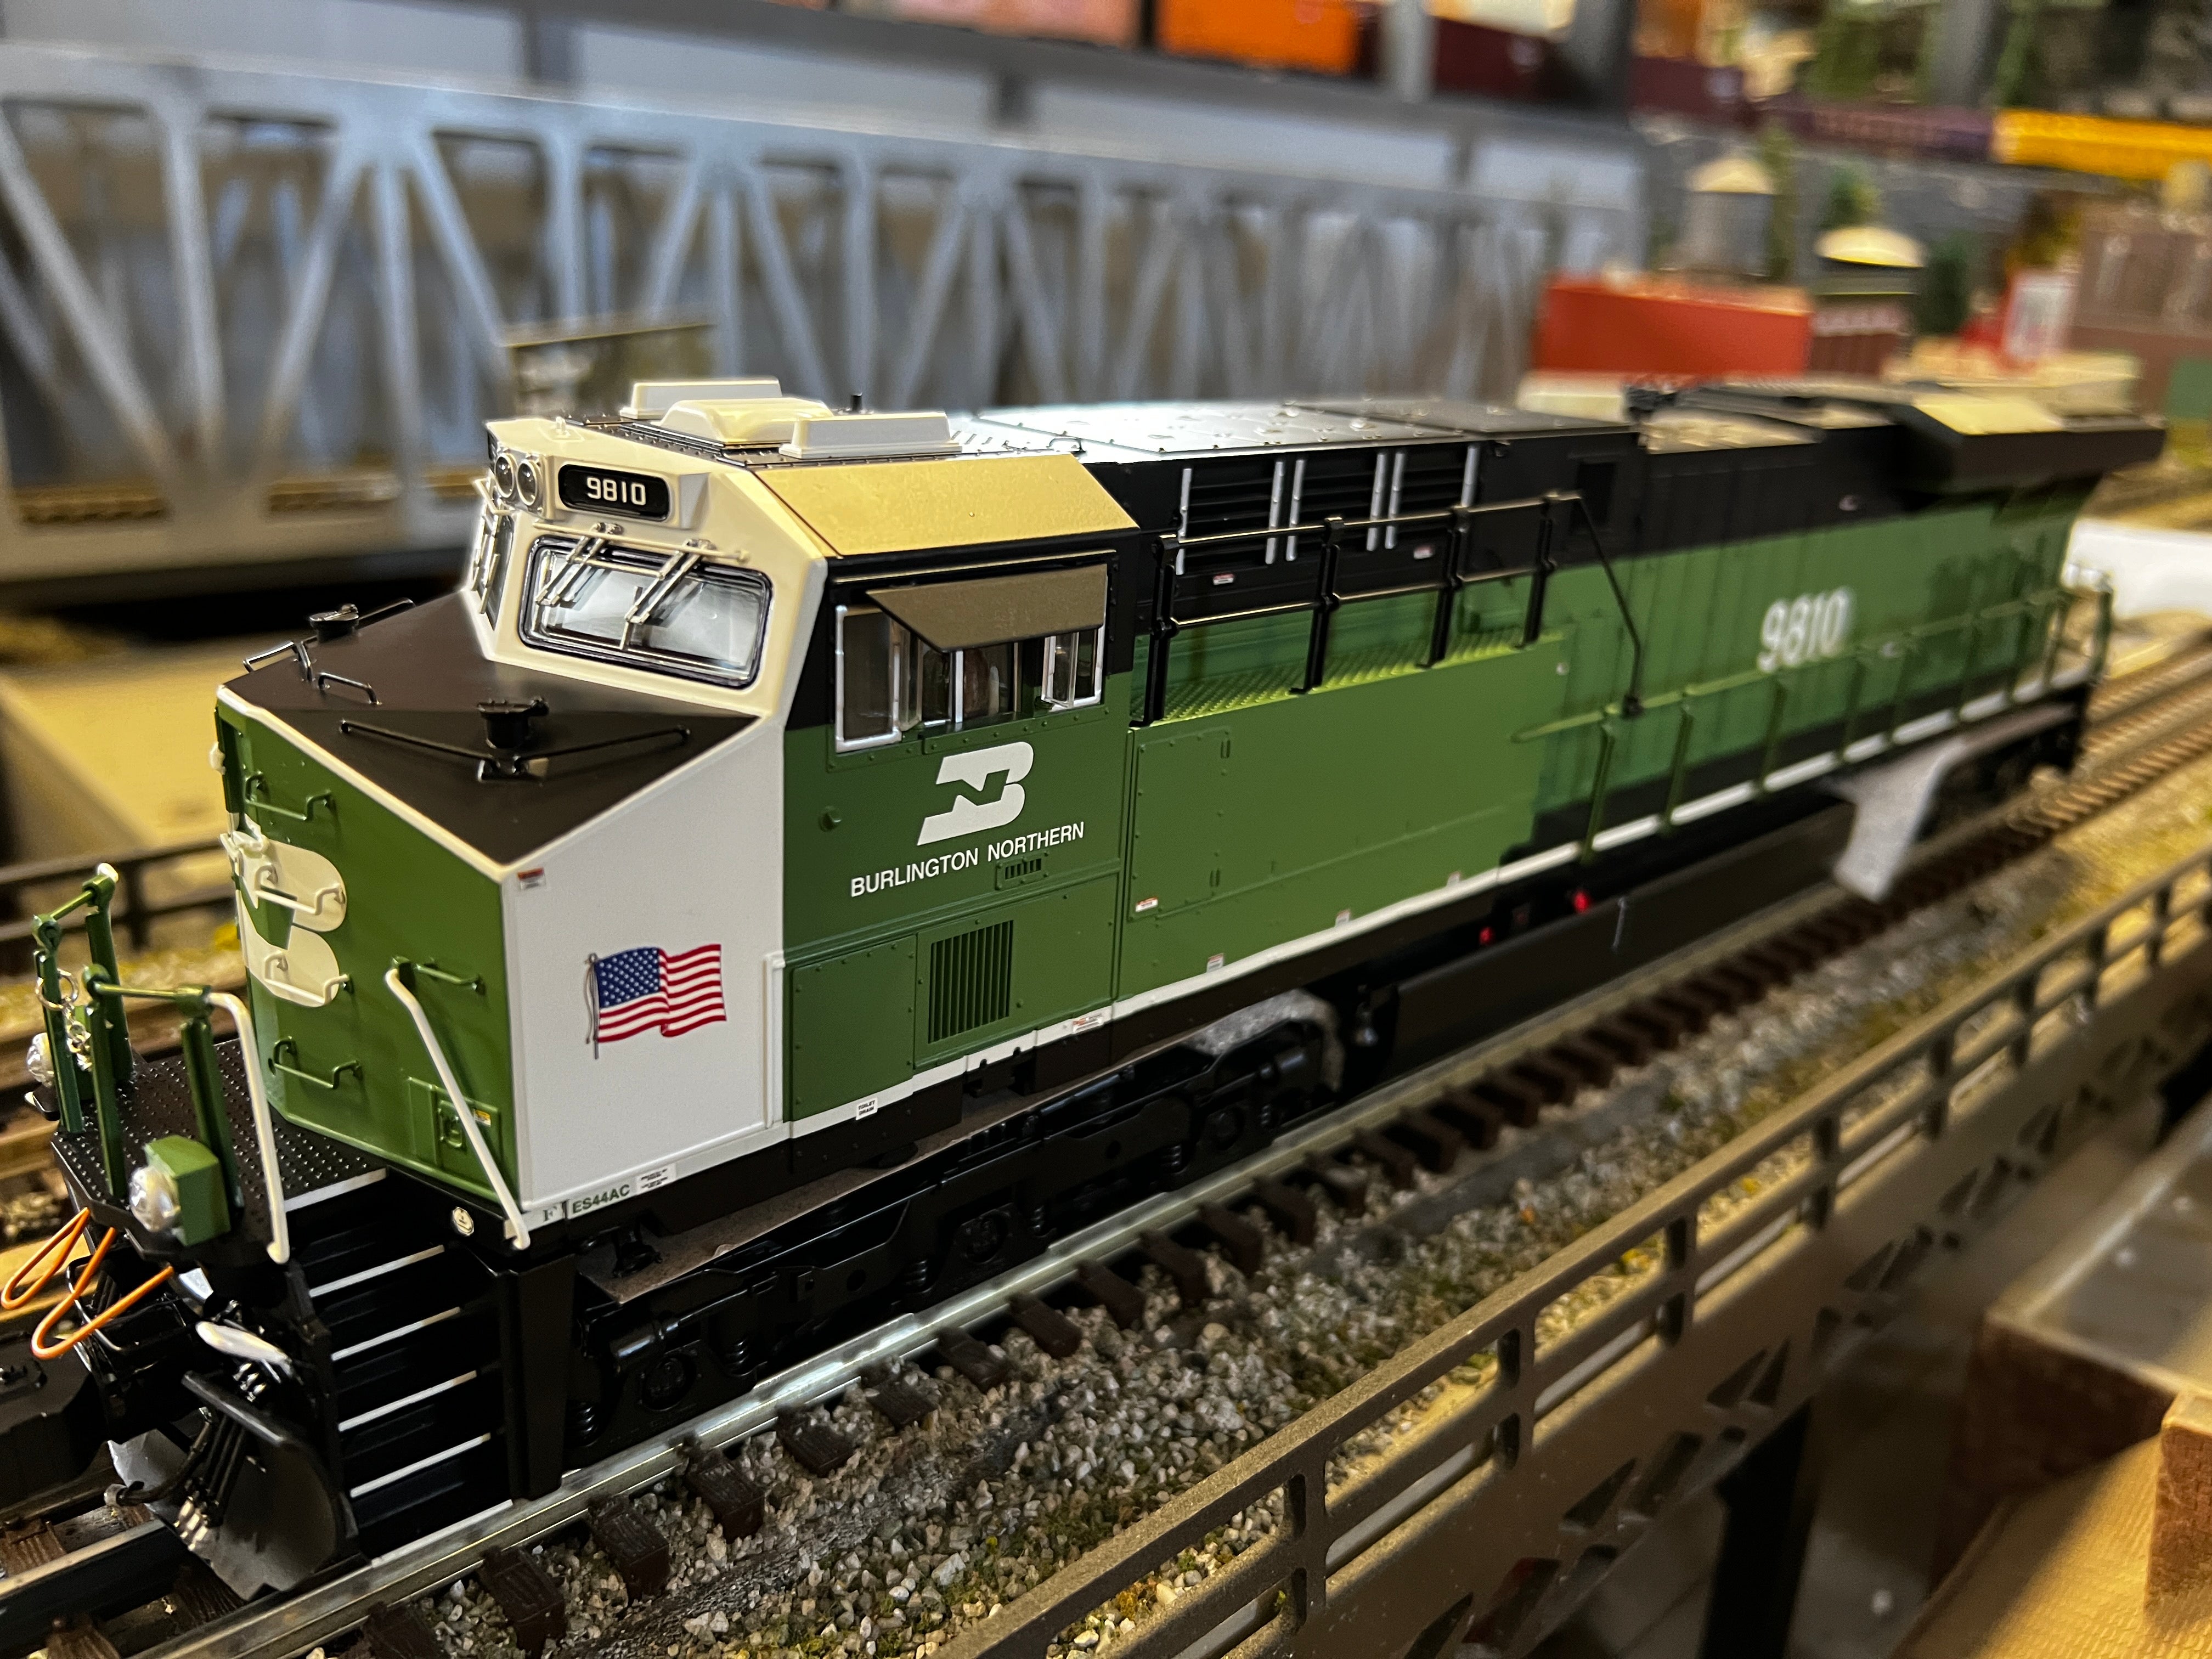 Lionel 2333432 - Legacy ES44AC Diesel Locomotive "Burlington Northern" #9810